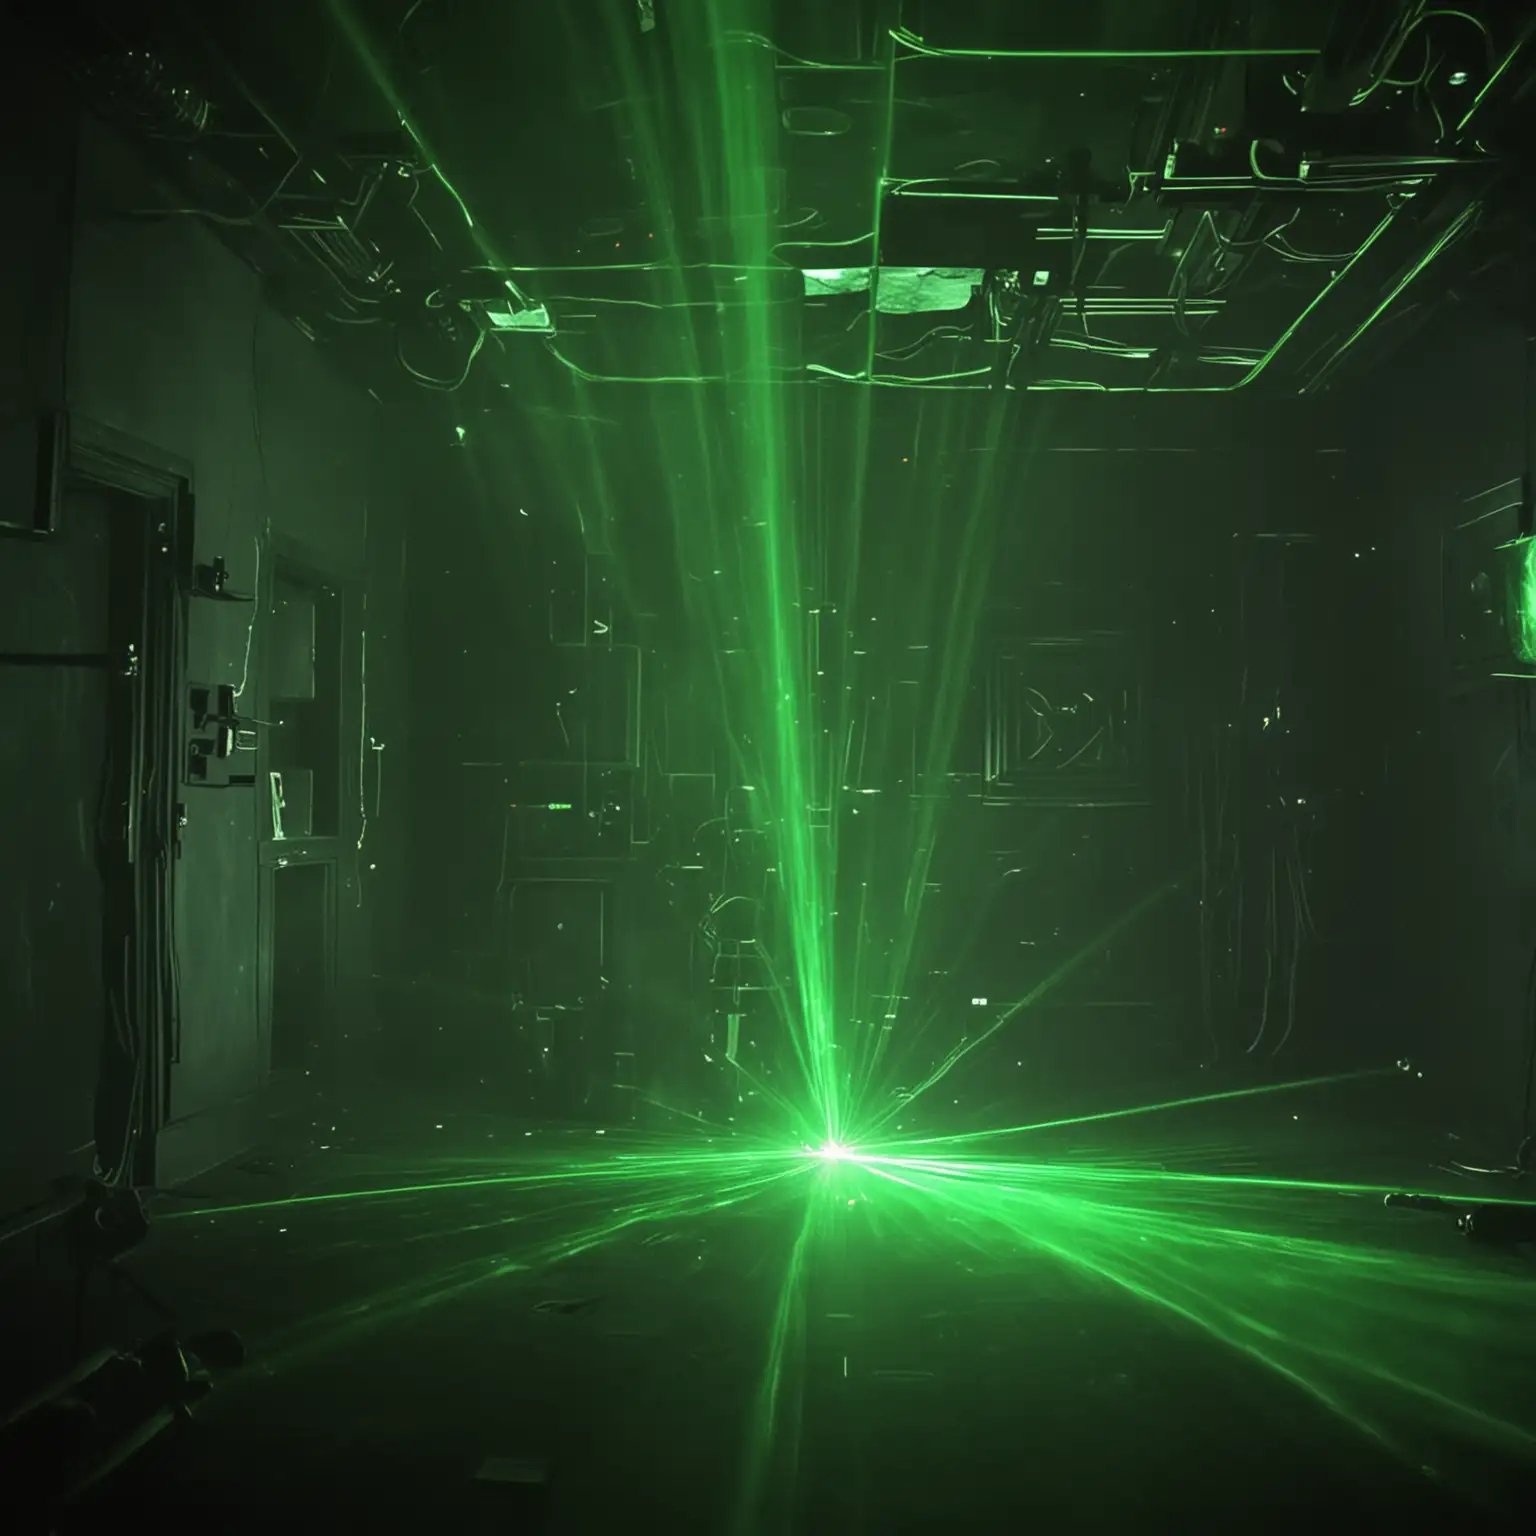 Ethereal Green Laser Illuminating Hazy Black Room